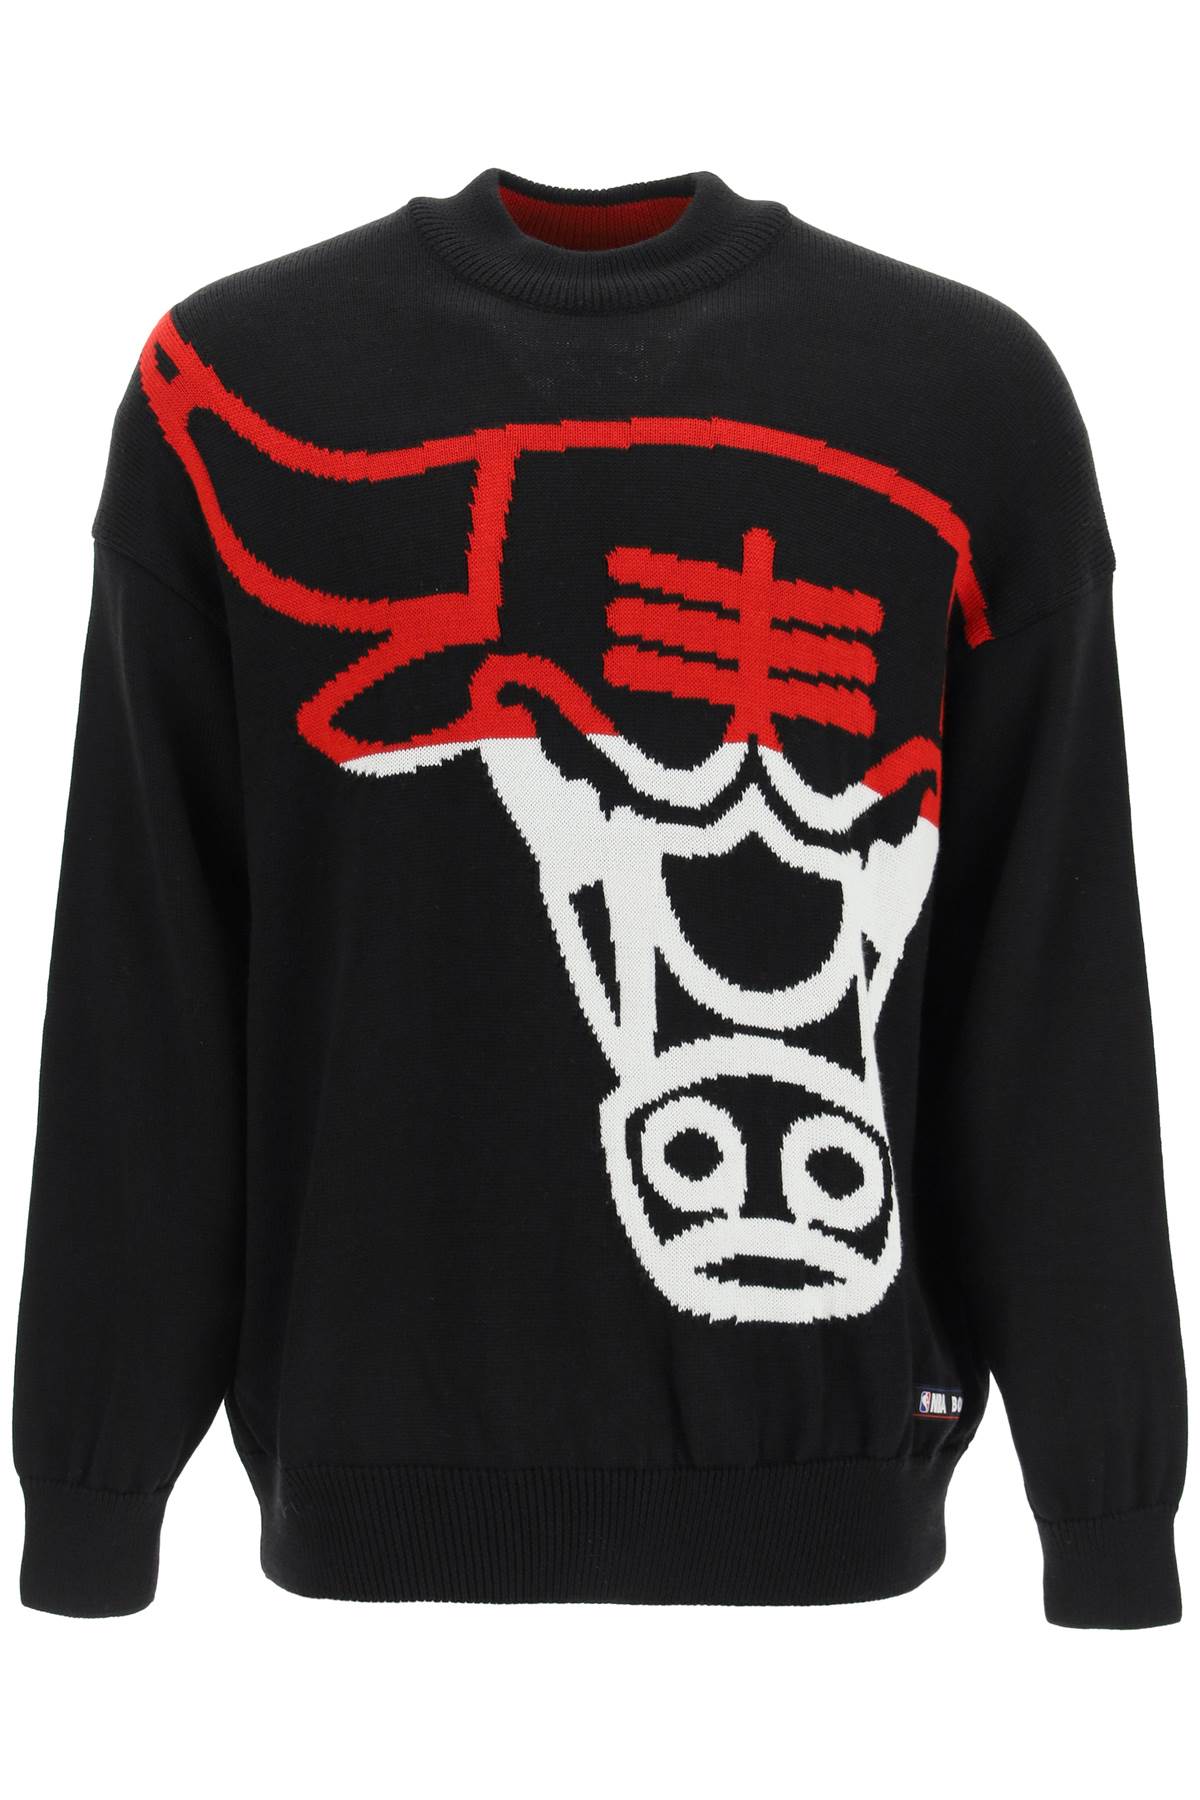 Hugo Boss Chicago Bulls Sweater X Nba